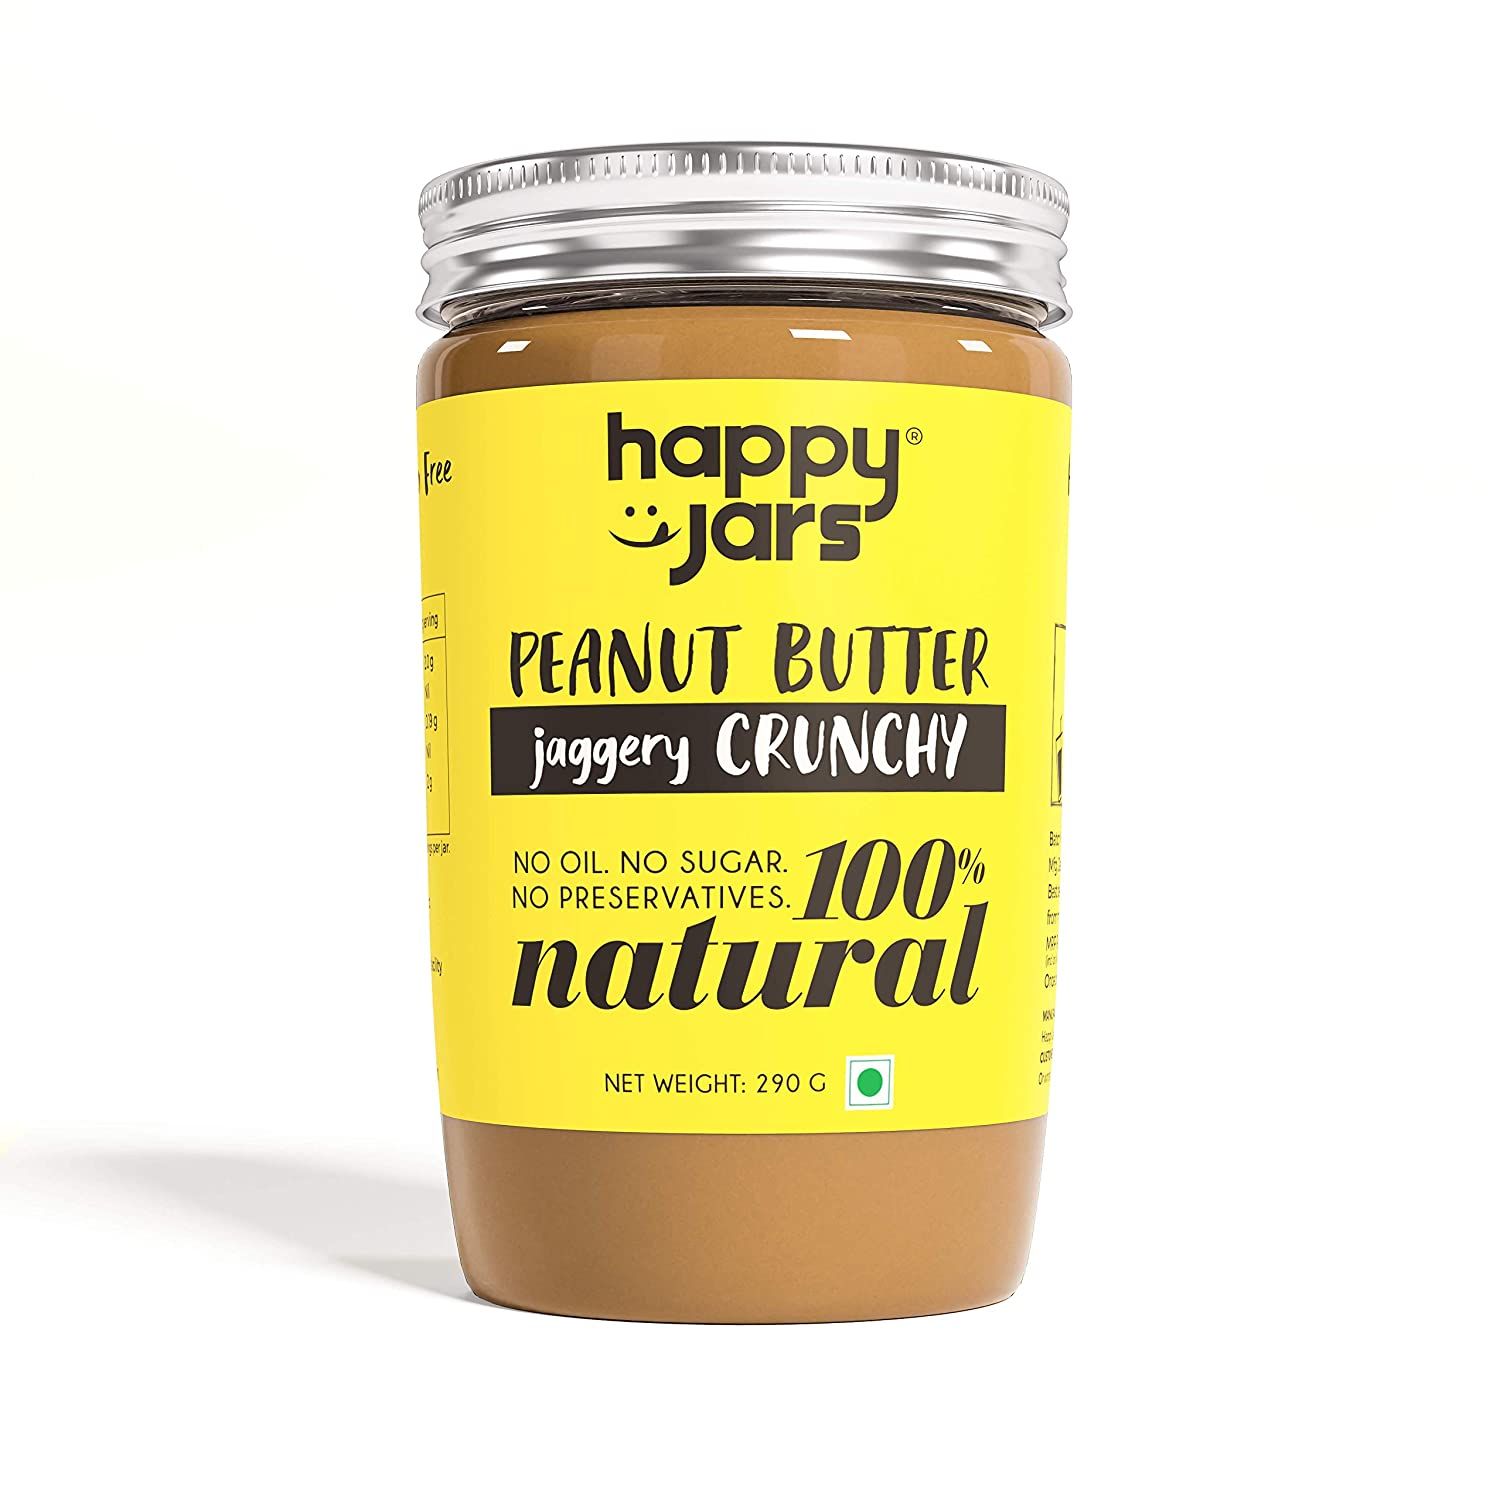 Happy Jars Jaggery Crunchy Peanut Butter Image